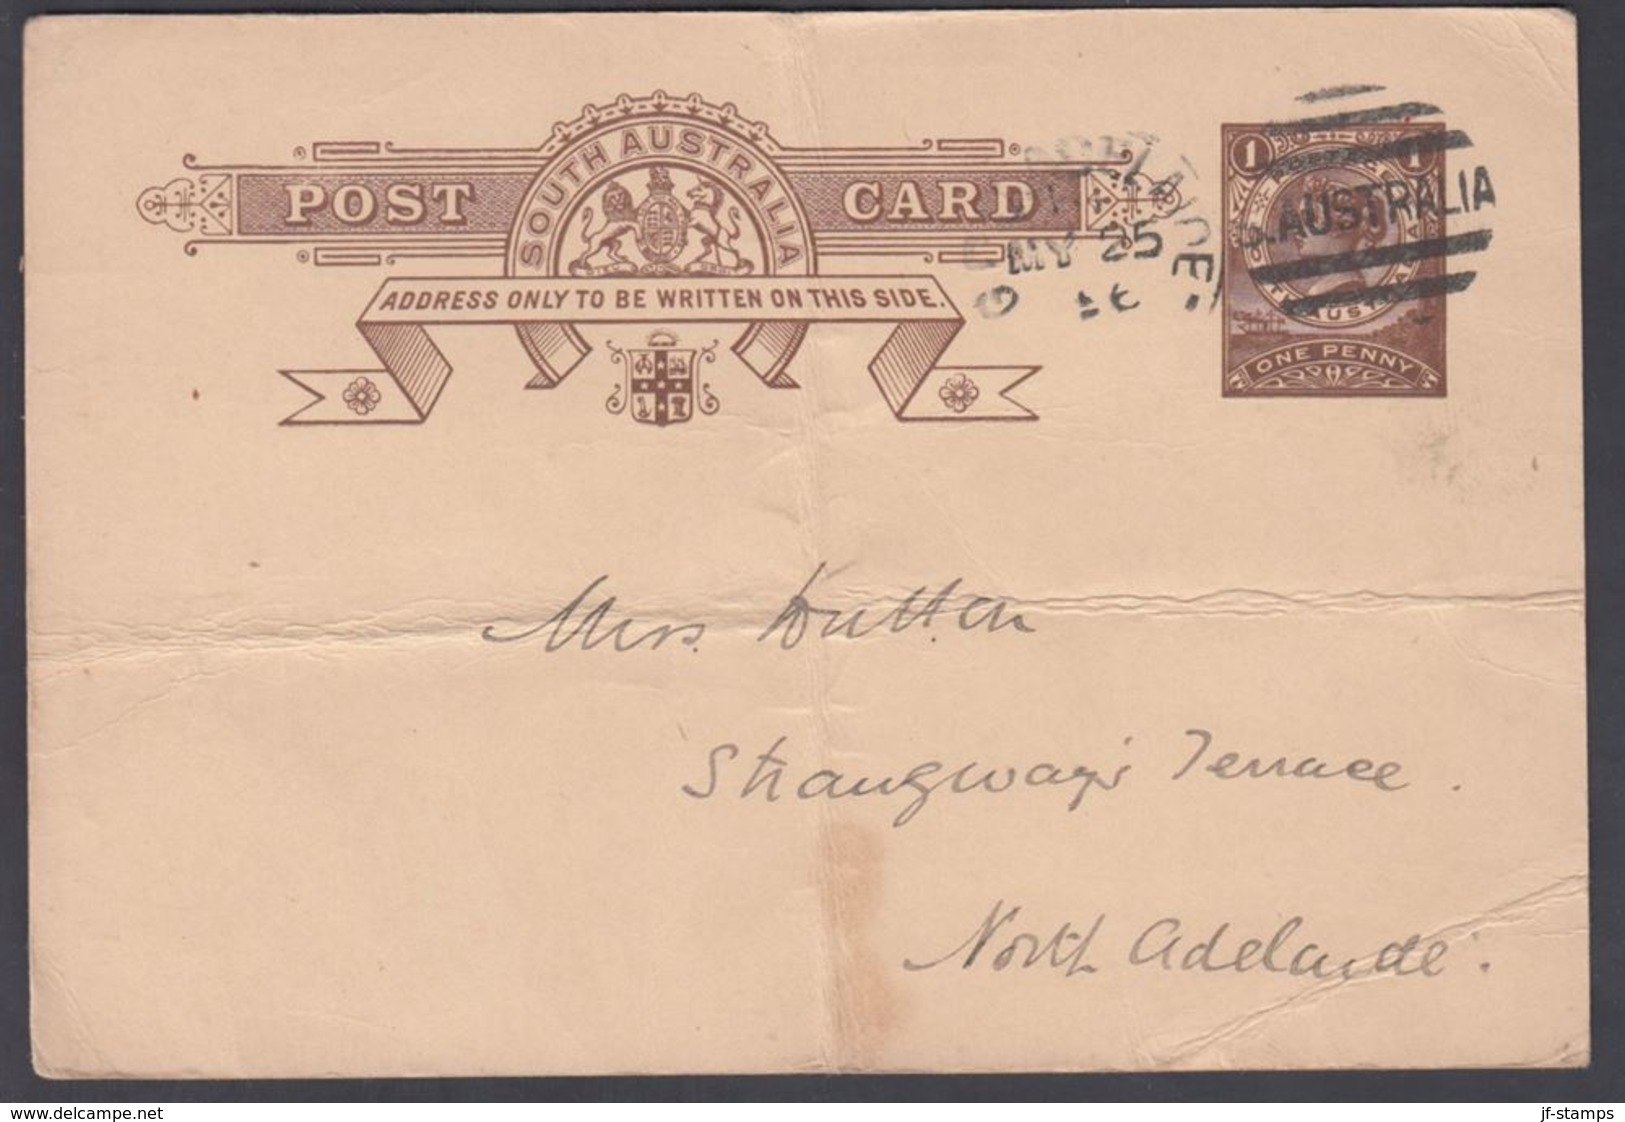 1896. QUEENSLAND AUSTRALIA  ONE PENNY POST CARD VICTORIA. MY 25 96.  () - JF321615 - Briefe U. Dokumente